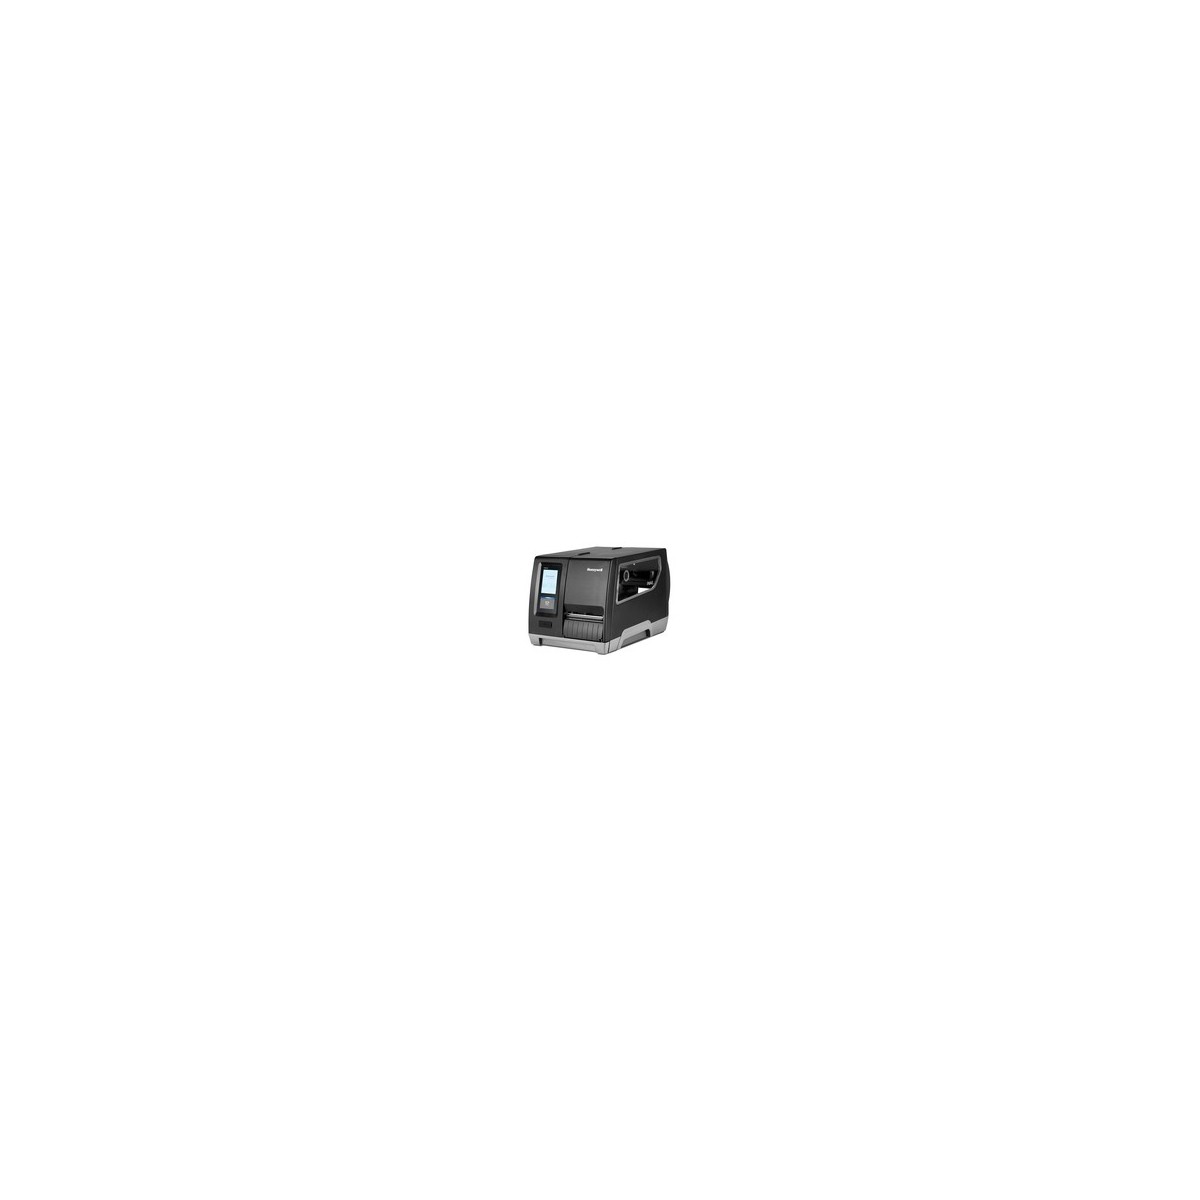 HONEYWELL PM45A - Thermal transfer - 300 x 300 DPI - 300 mm-sec - Wired  Wireless - Black